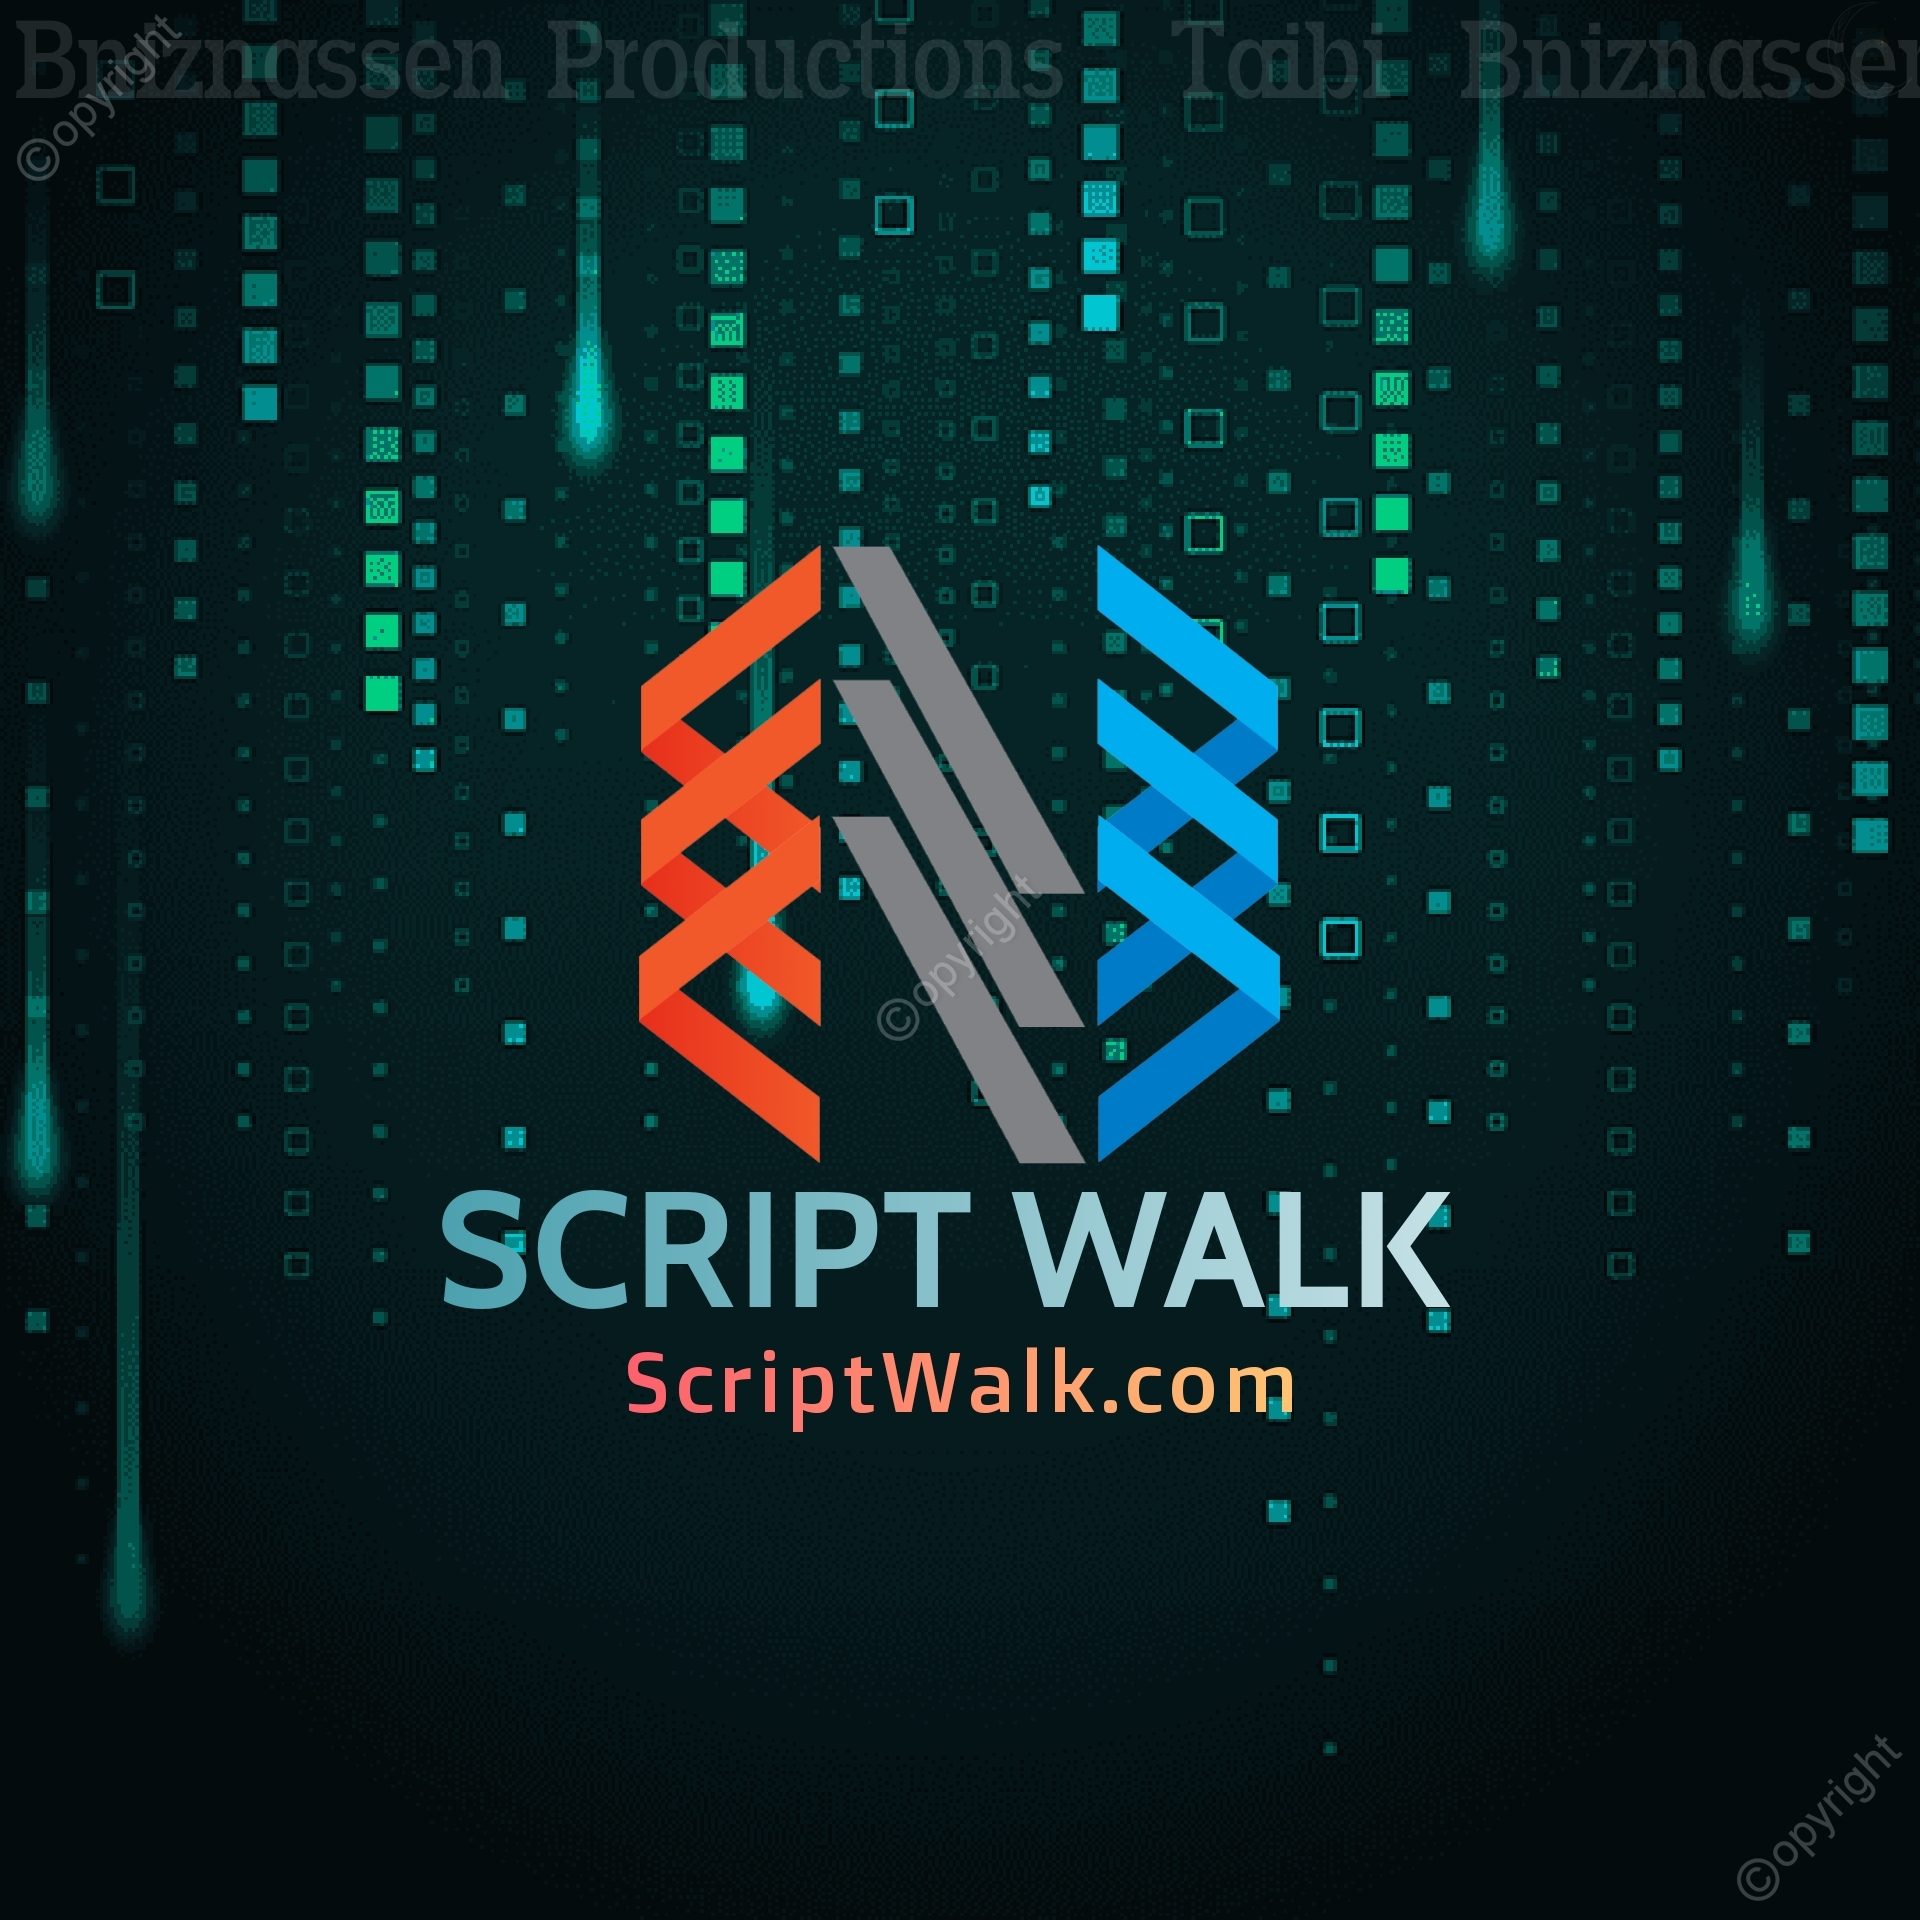 Script Walk - (ScriptWalk. com) Logo By Bniznassen Production - TAIBI (3).jpg